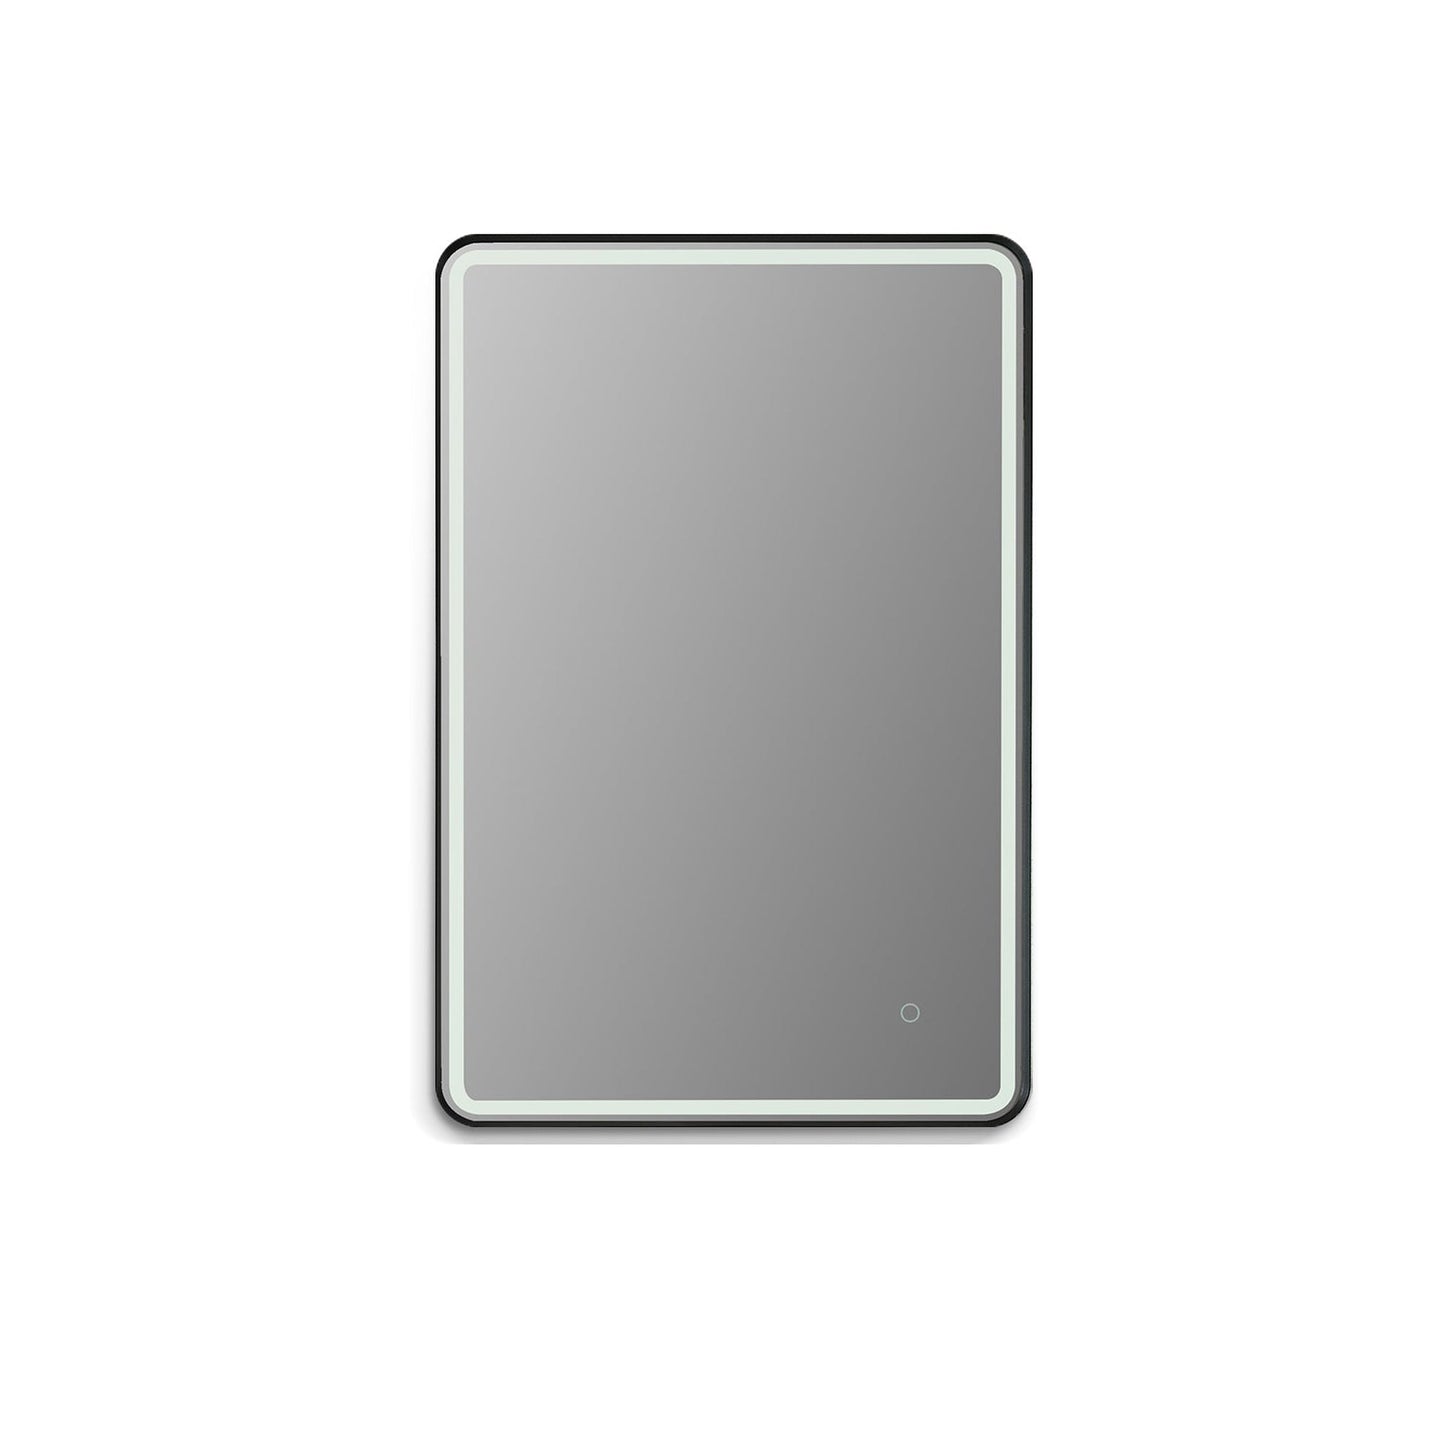 Altair Viaggi 24" Rectangle Matte Black Wall-Mounted LED Mirror